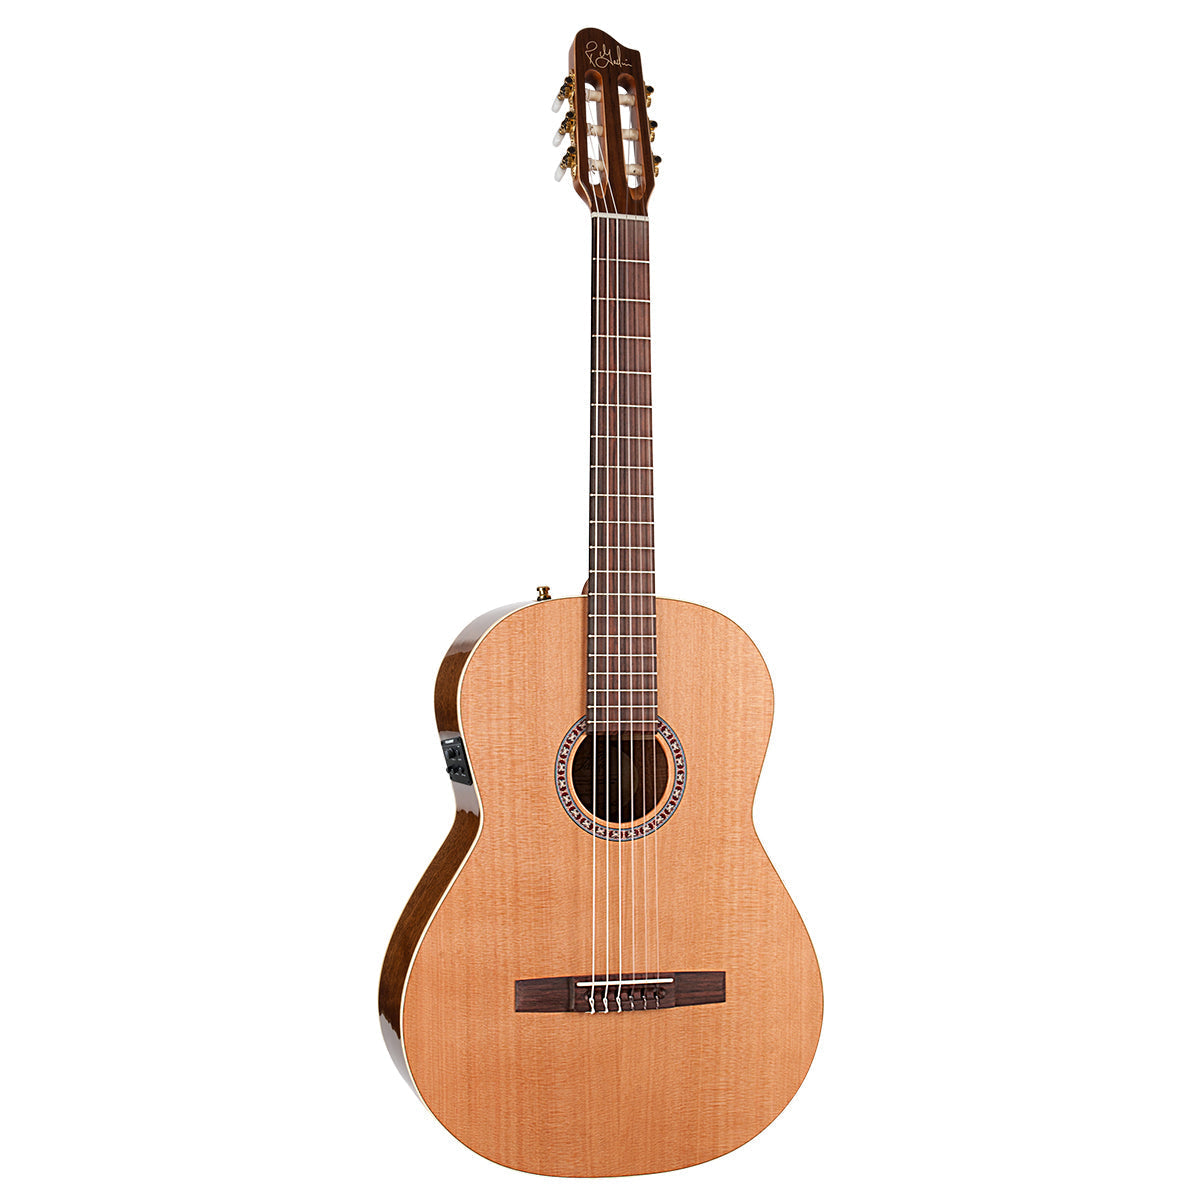 Godin Concert Clasica II Nylon String Electro Guitar,  for sale at Richards Guitars.